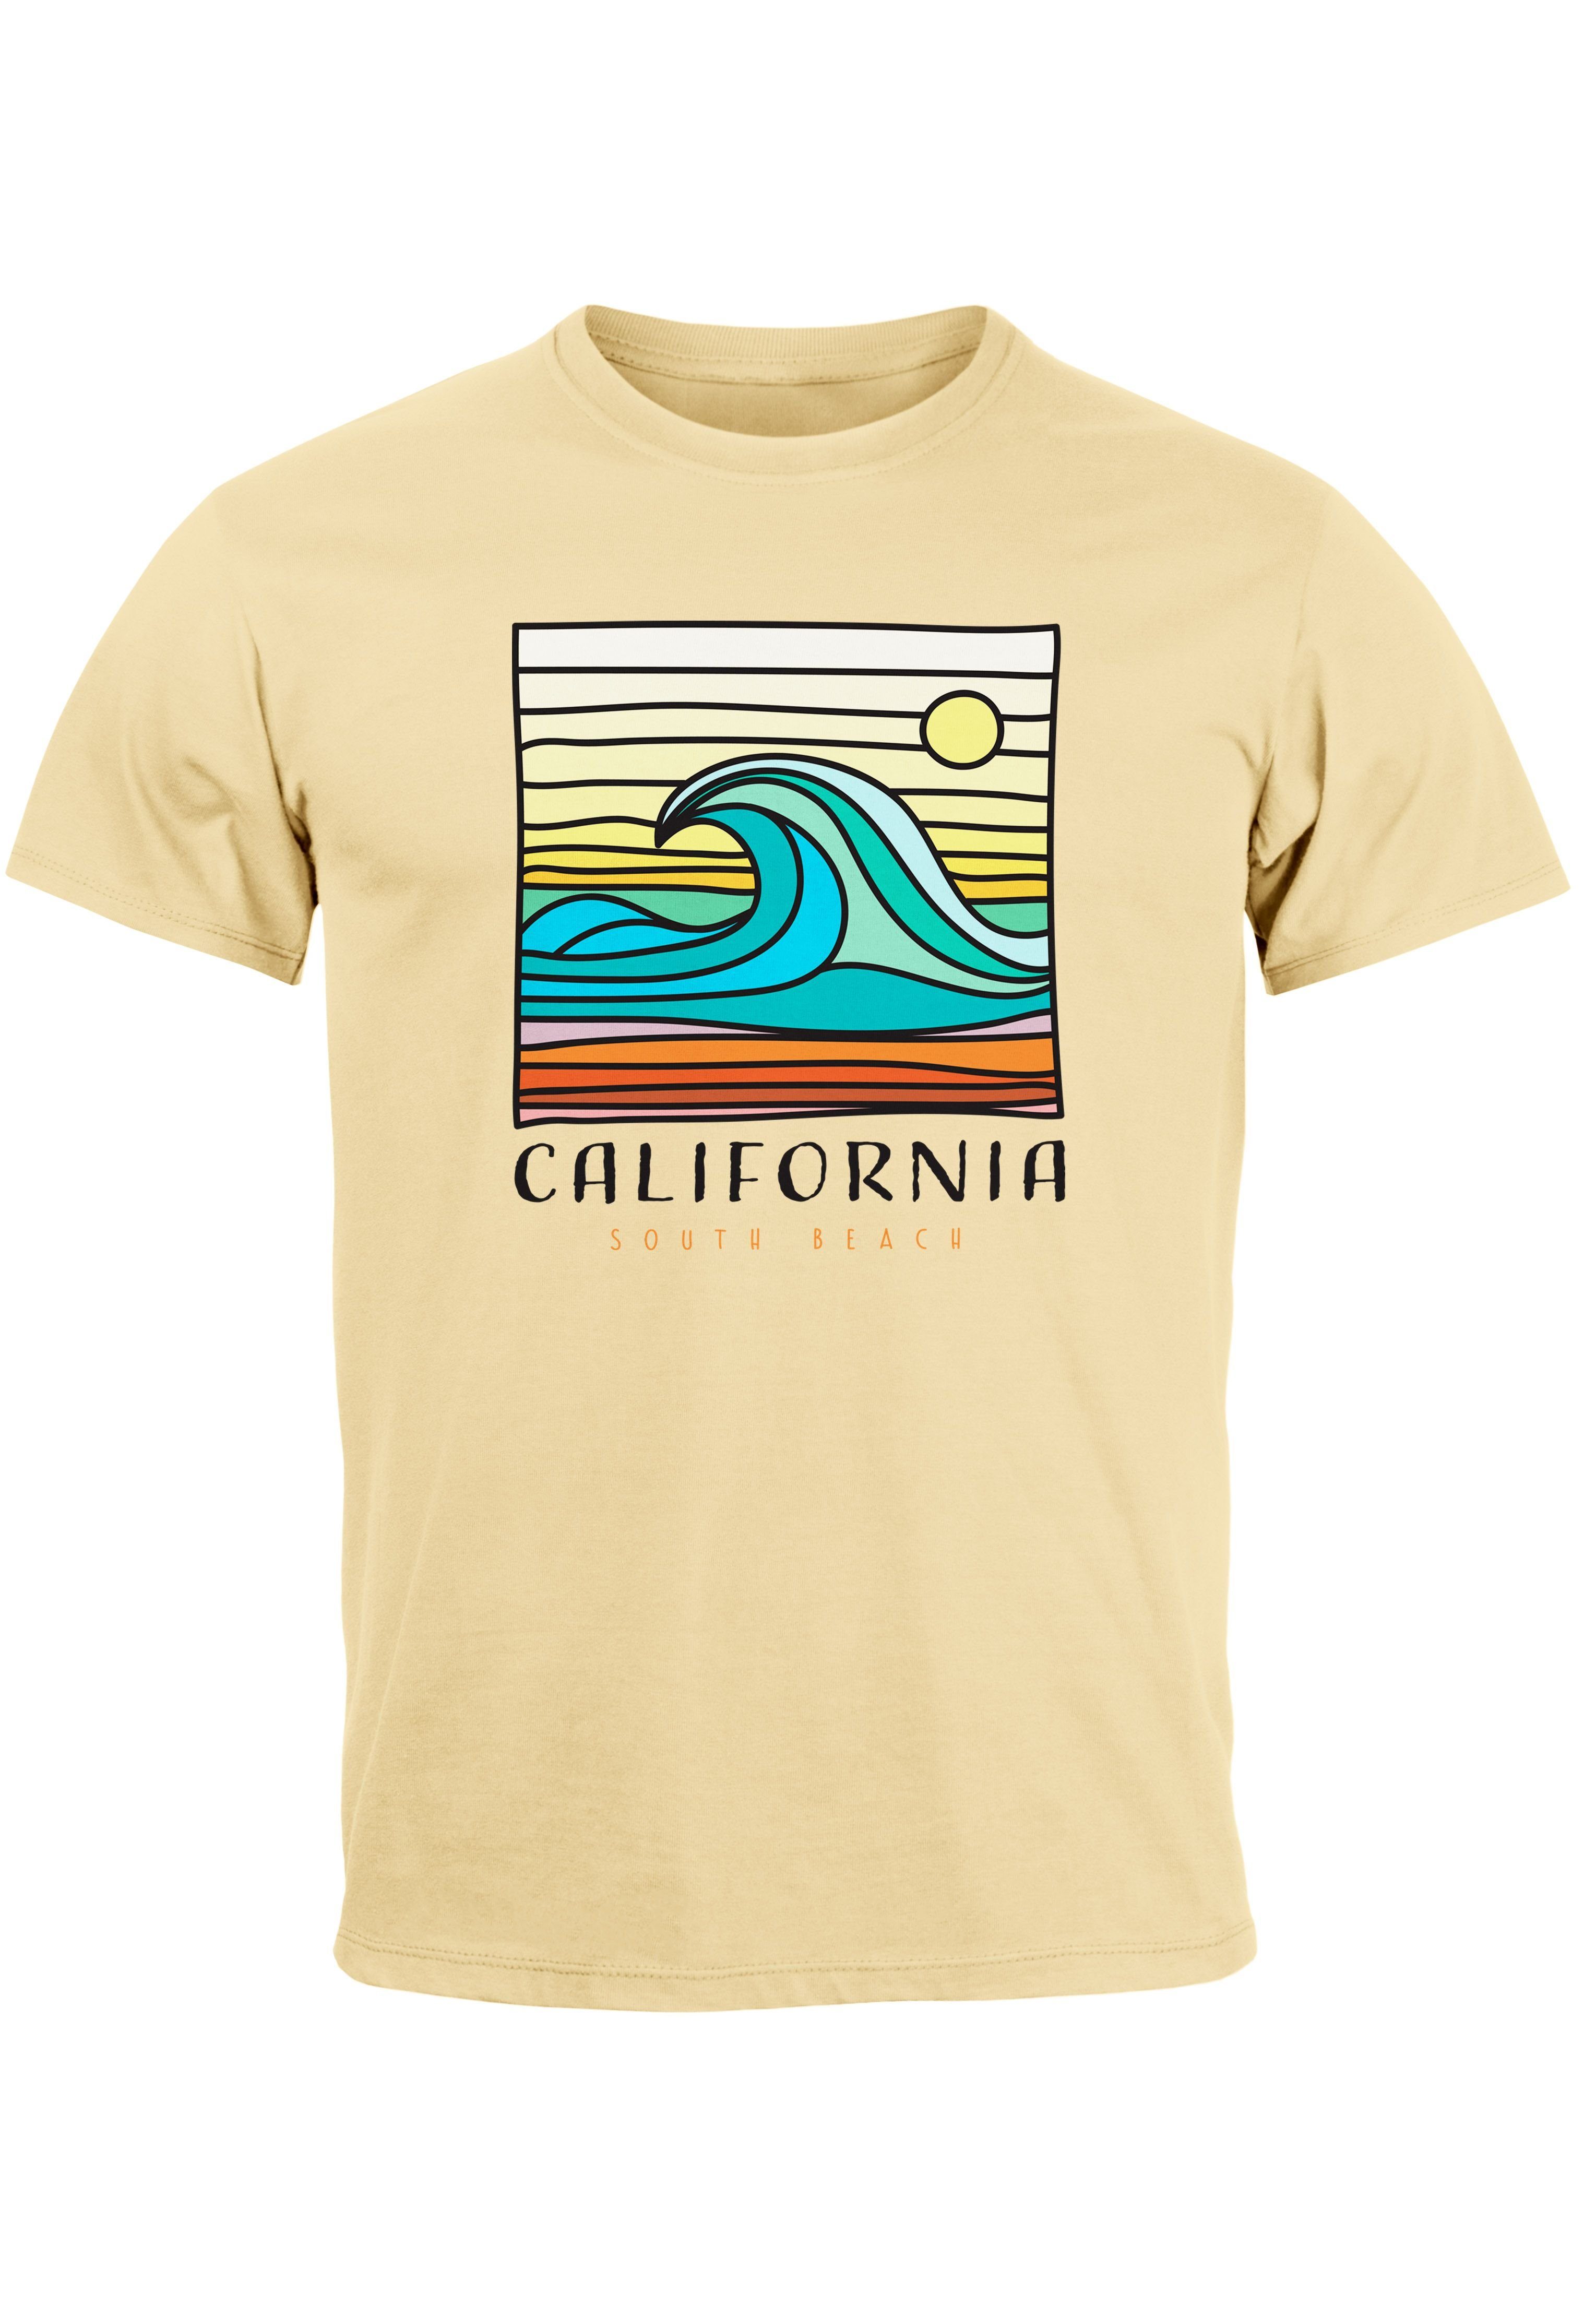 Neverless Print-Shirt Herren T-Shirt California South Beach Welle Wave Surfing Print Aufdruc mit Print natur